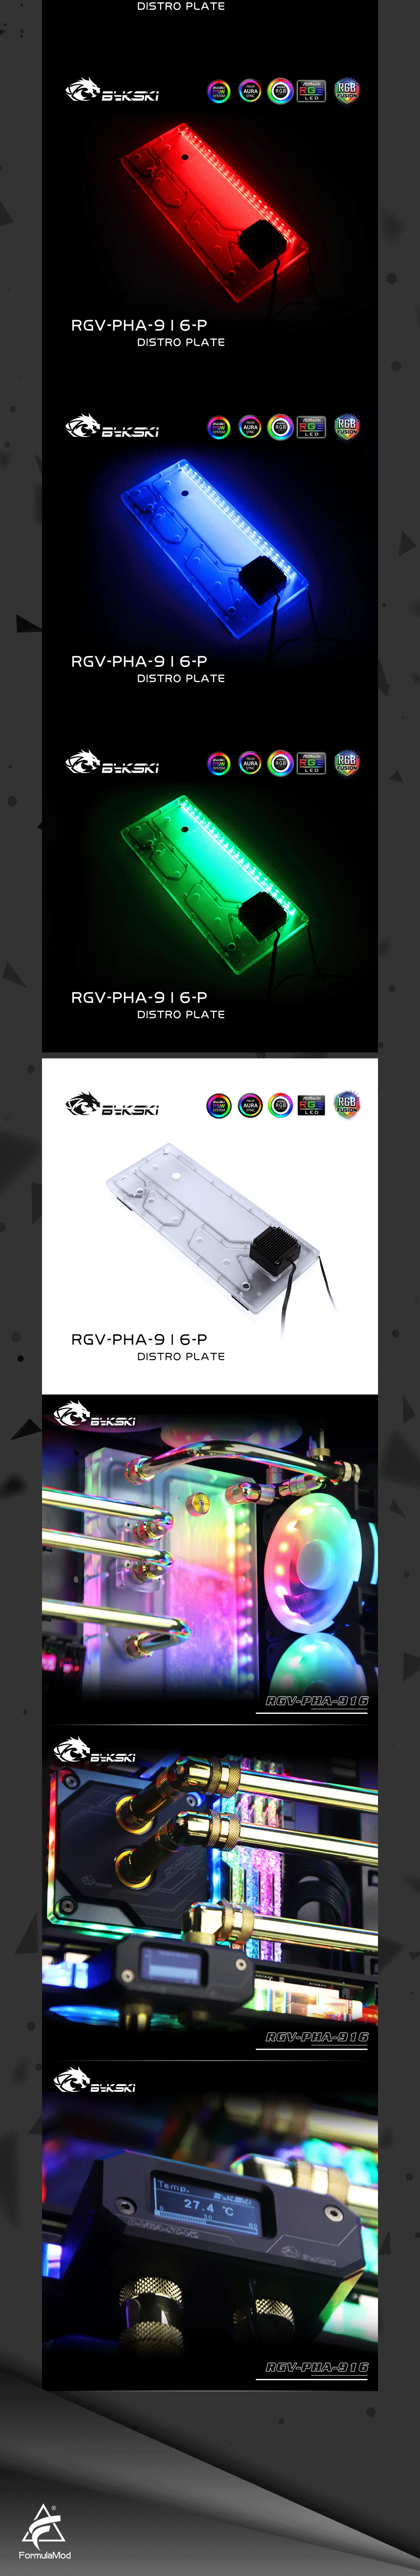 Bykski Waterway Cooling Kit For PHANTEKS PH-ES916E Case, 5V ARGB, For Single GPU Building, RGV-PHA-916-P  